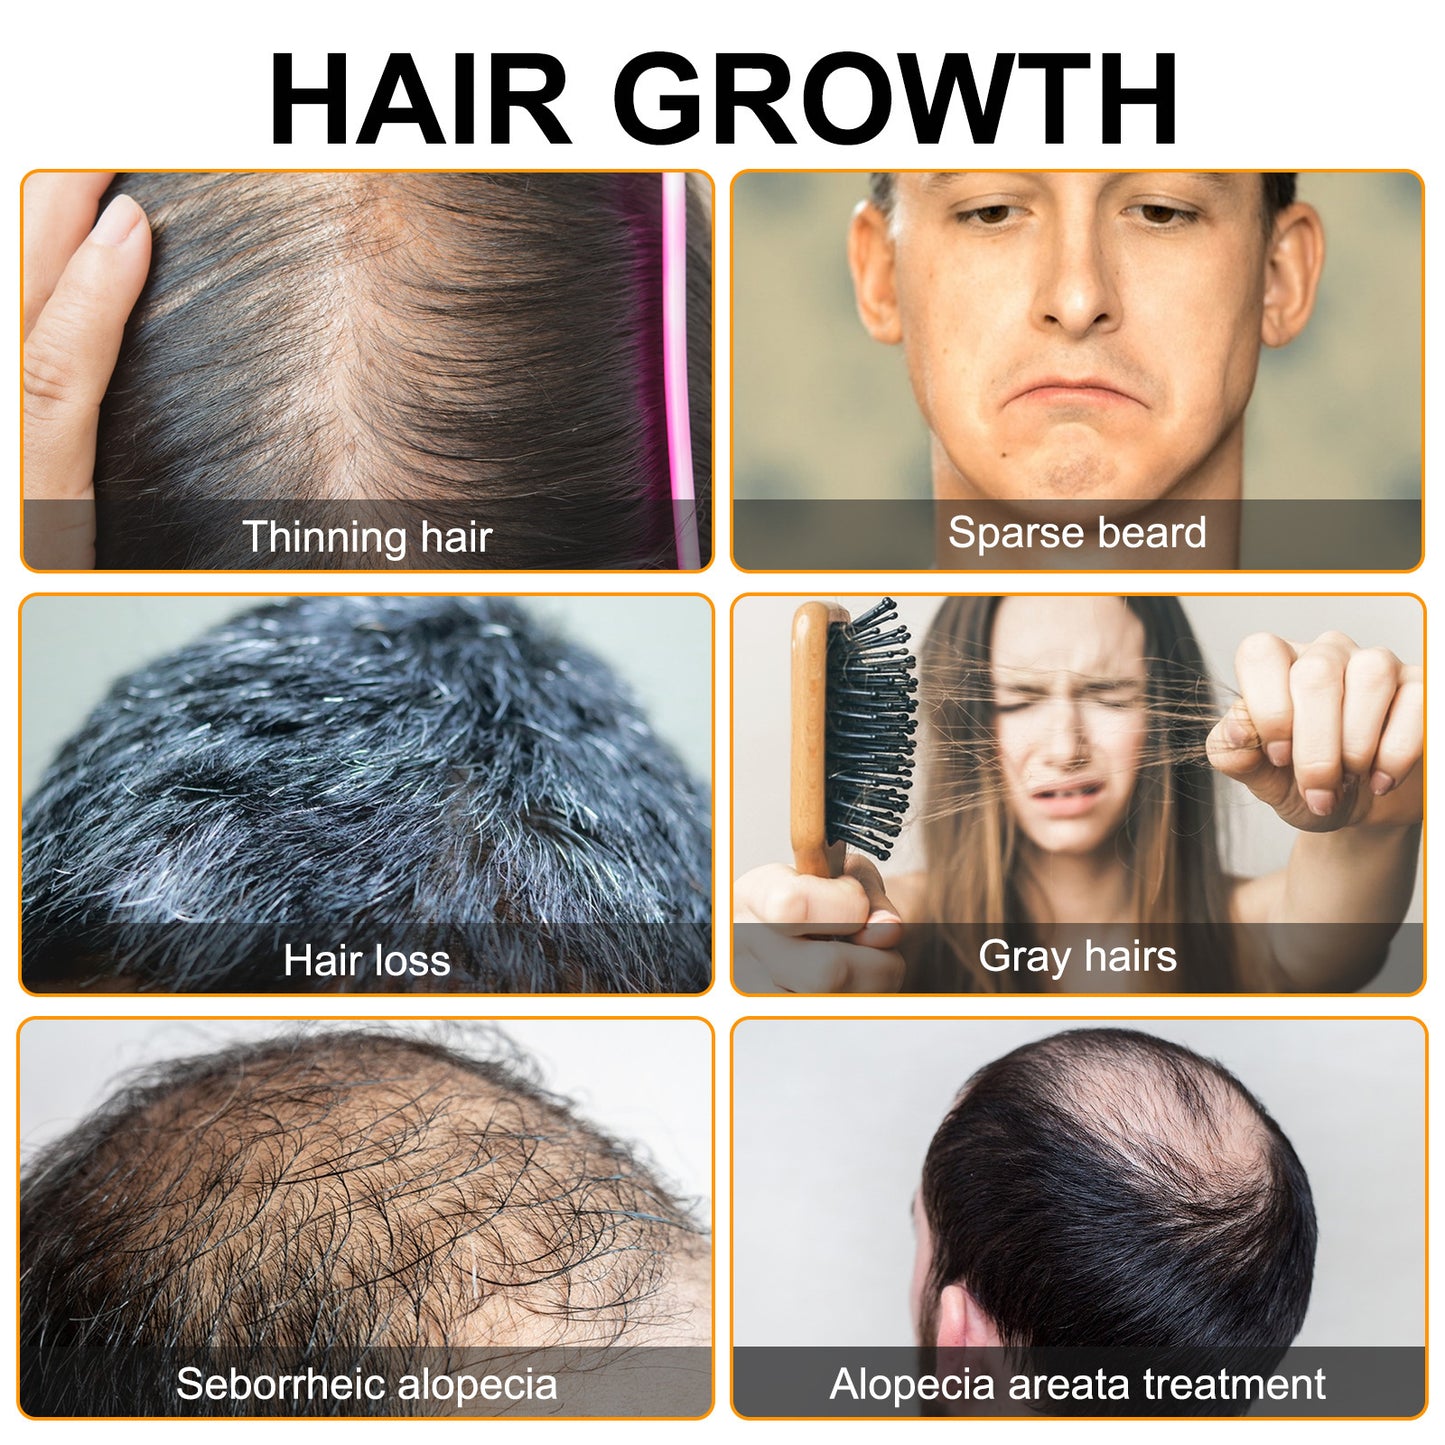 Hair Growth Moisturizing The Scalp And Preventing Hair Loss